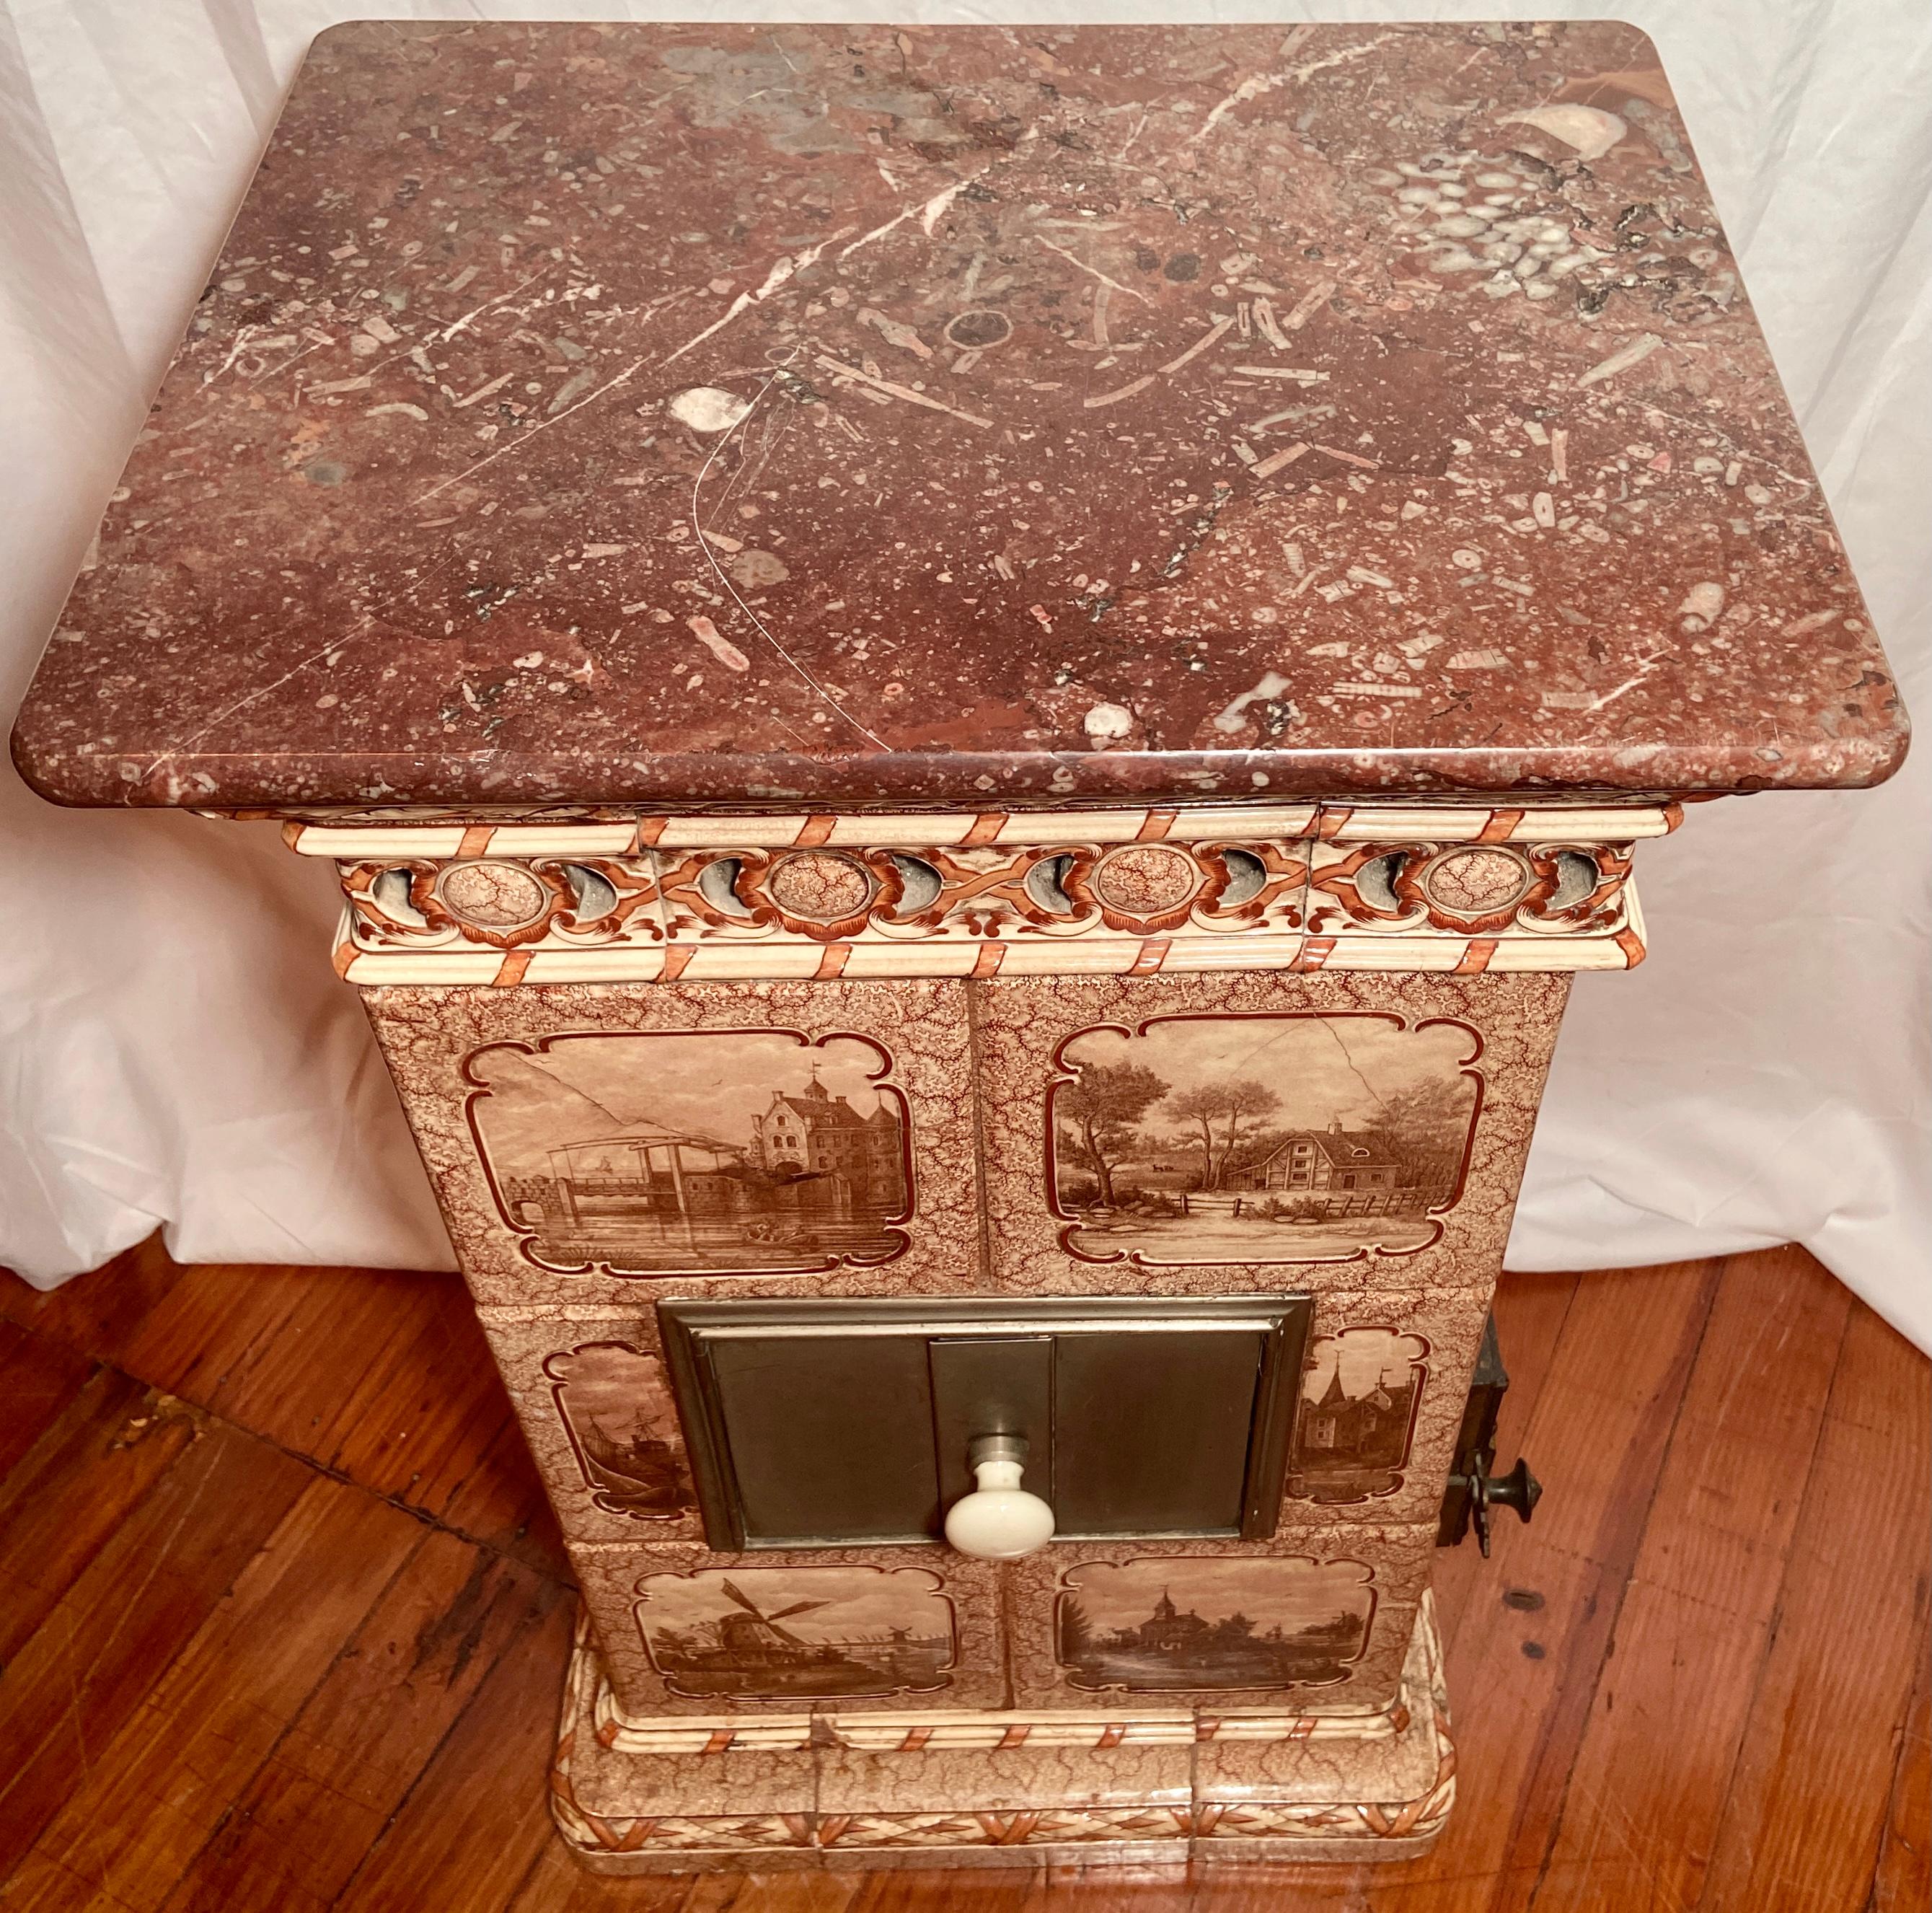 Antique 19th century Dutch Provincial marble-top ceramic tile stove, Circa 1880.